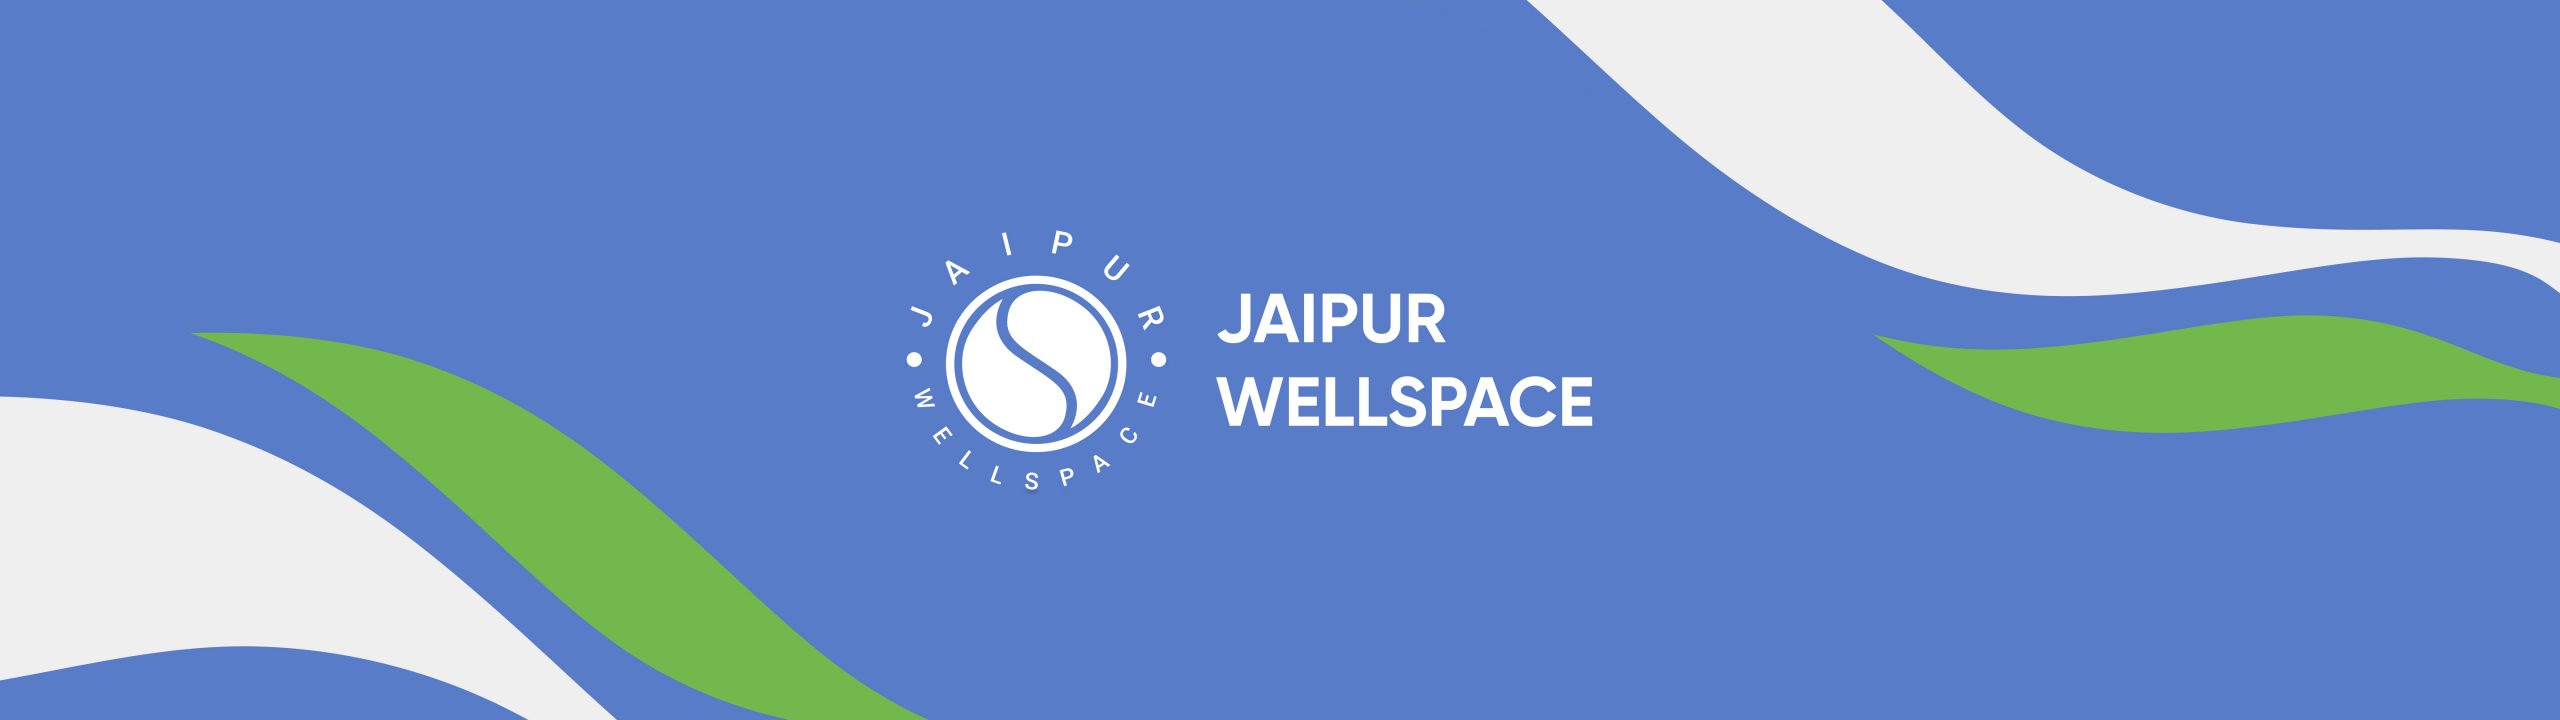 jaipur wellspace